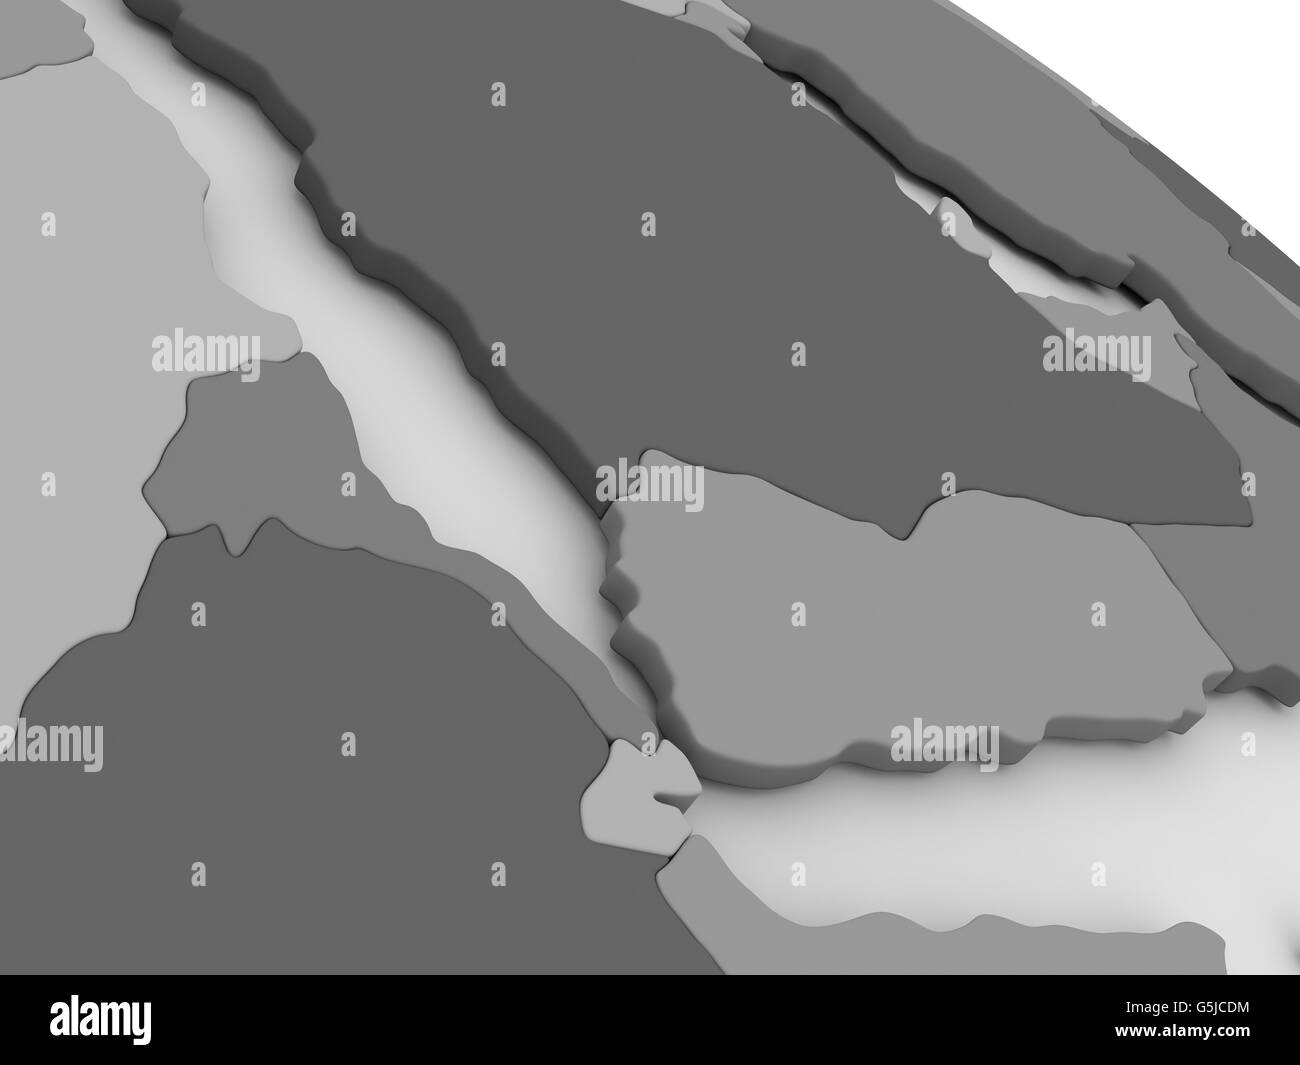 Map of Yemen, Eritrea and Djibouti on grey model of Earth. 3D illustration Stock Photo